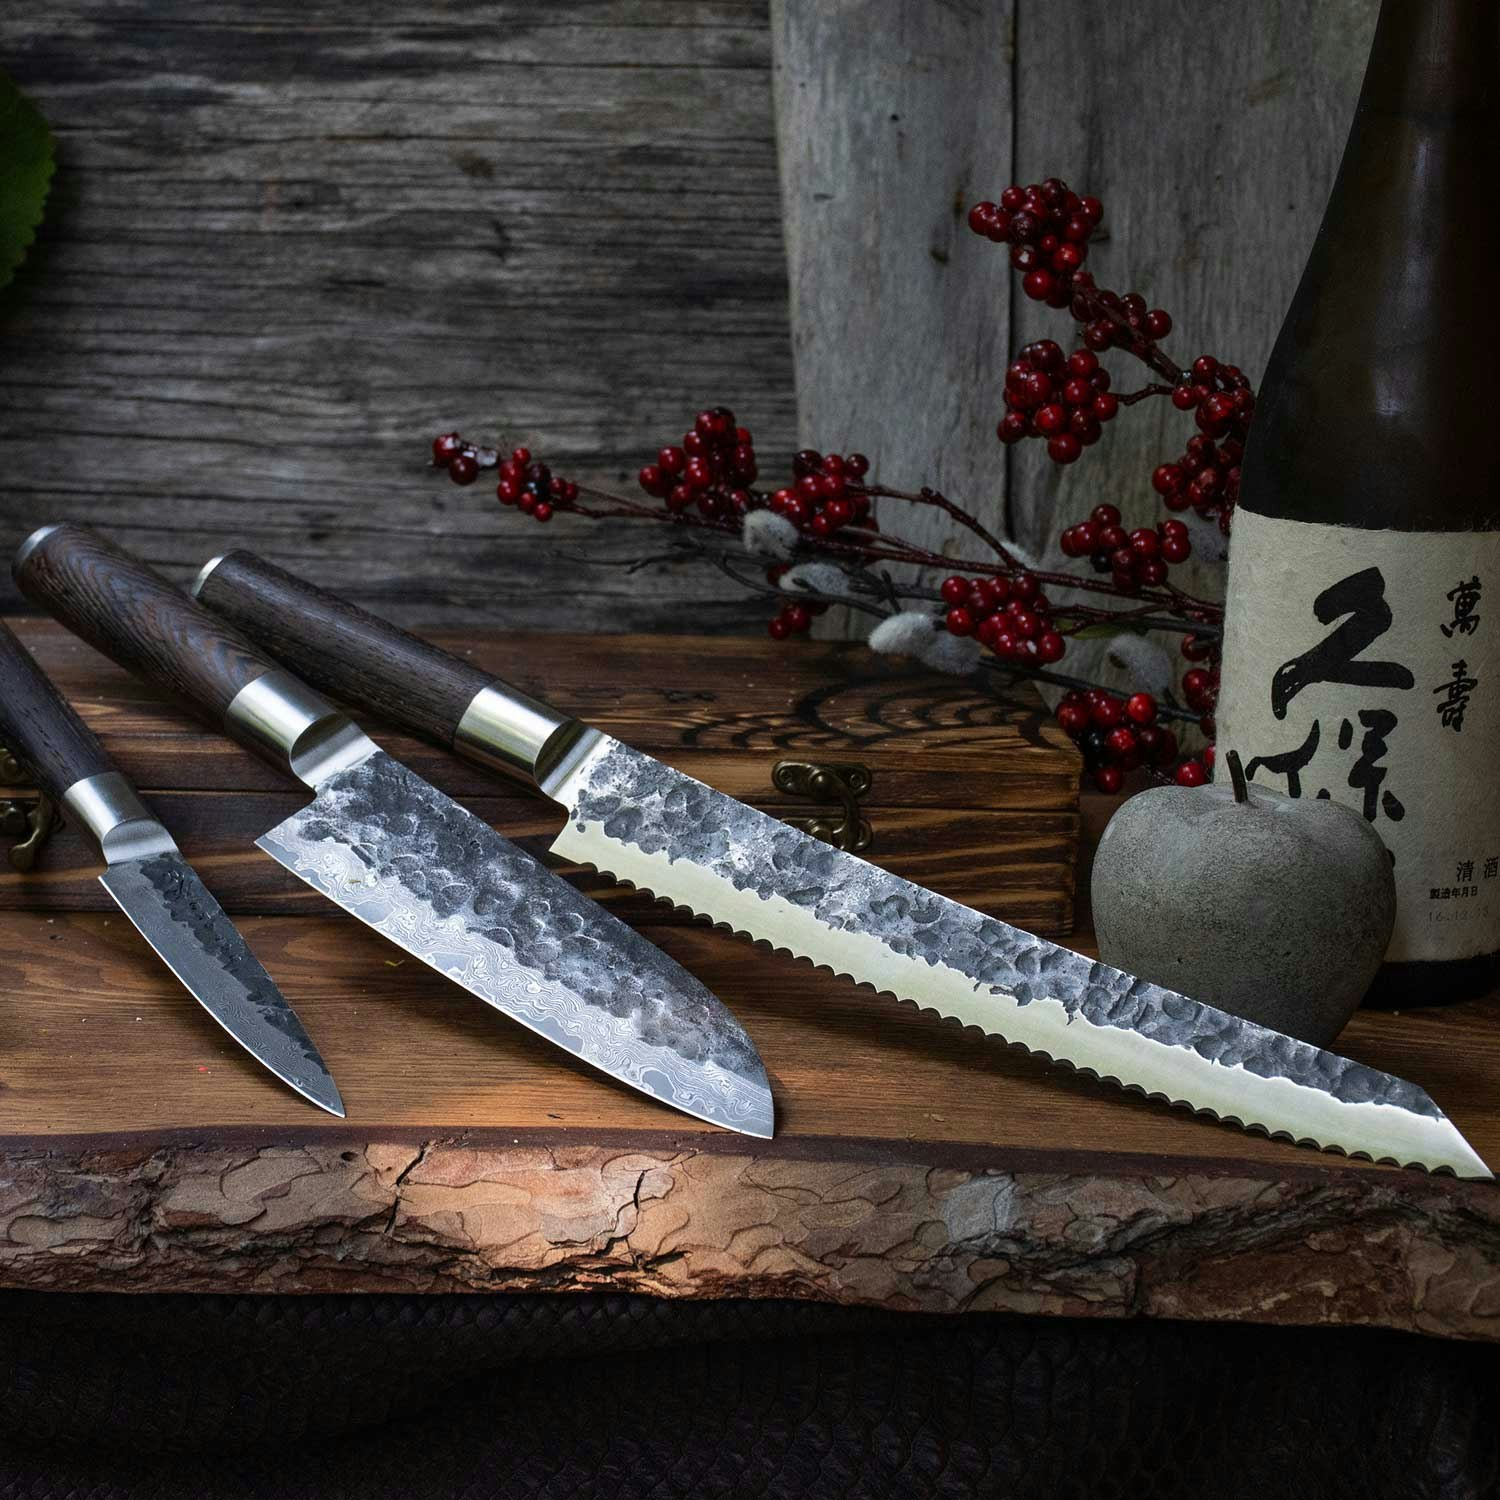 https://royaldesign.com/image/2/satake-kuro-knife-set-3-pieces-2